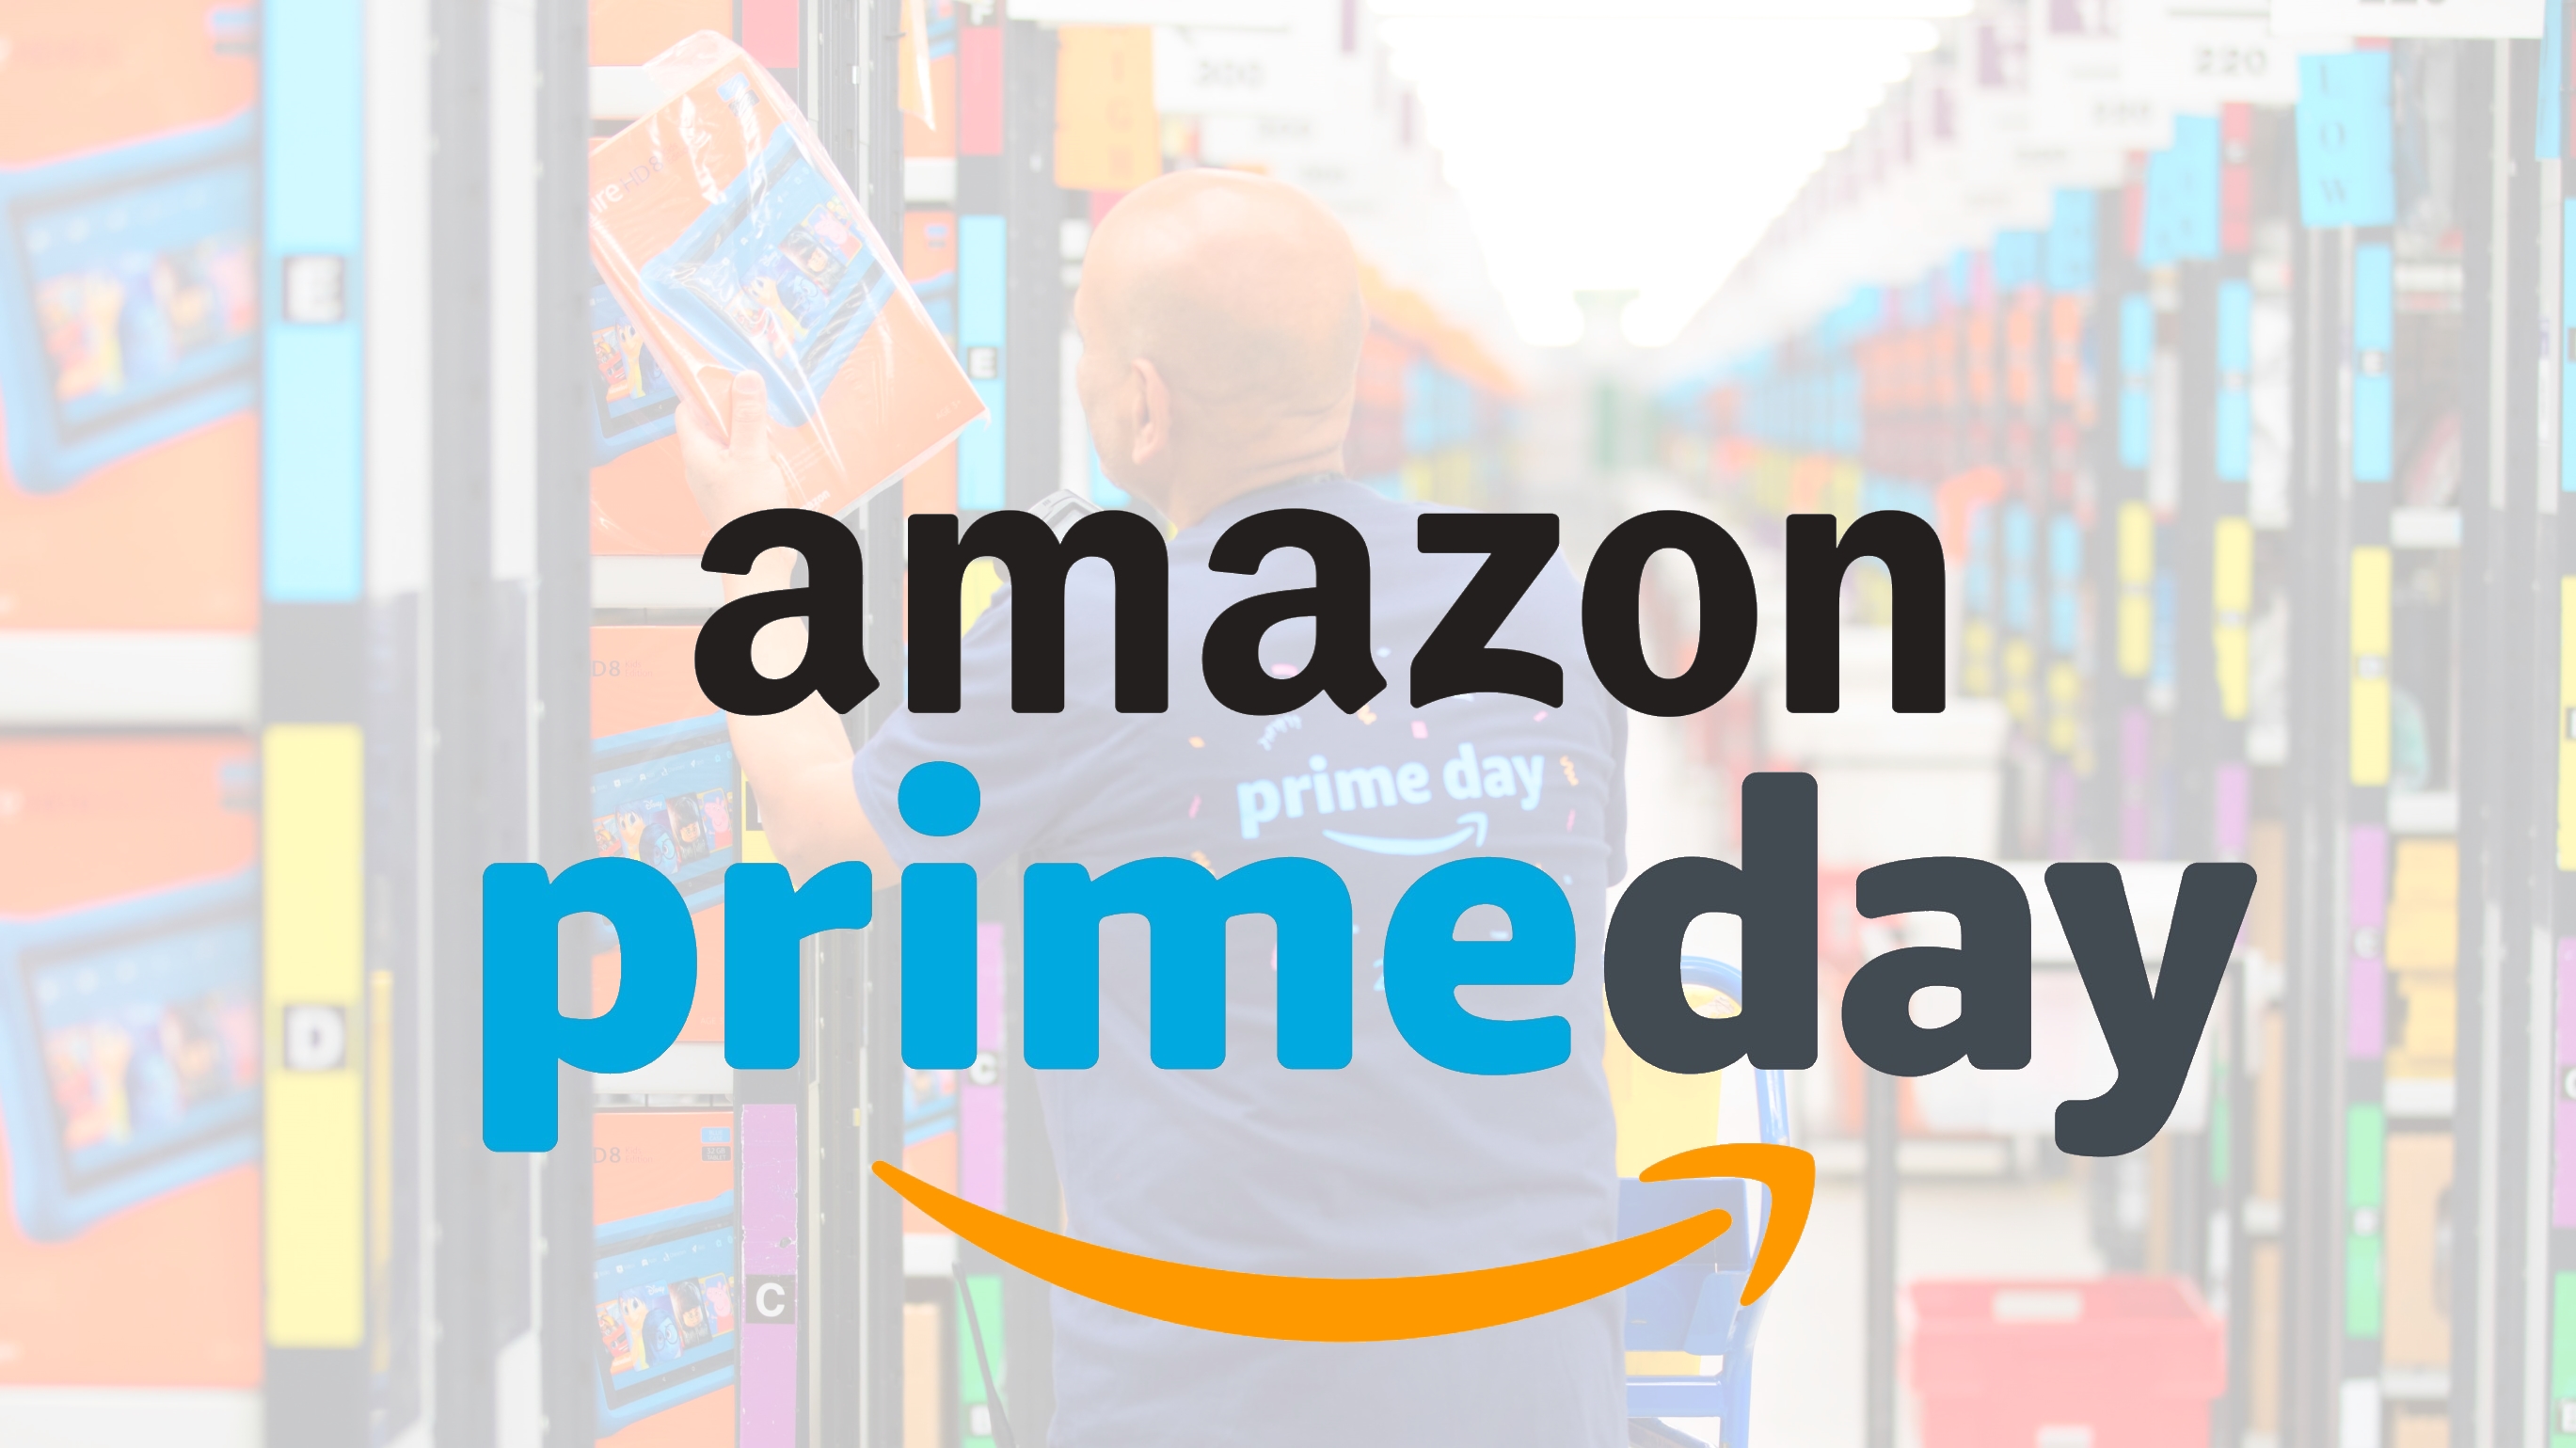 Amazon Prime Day 2019